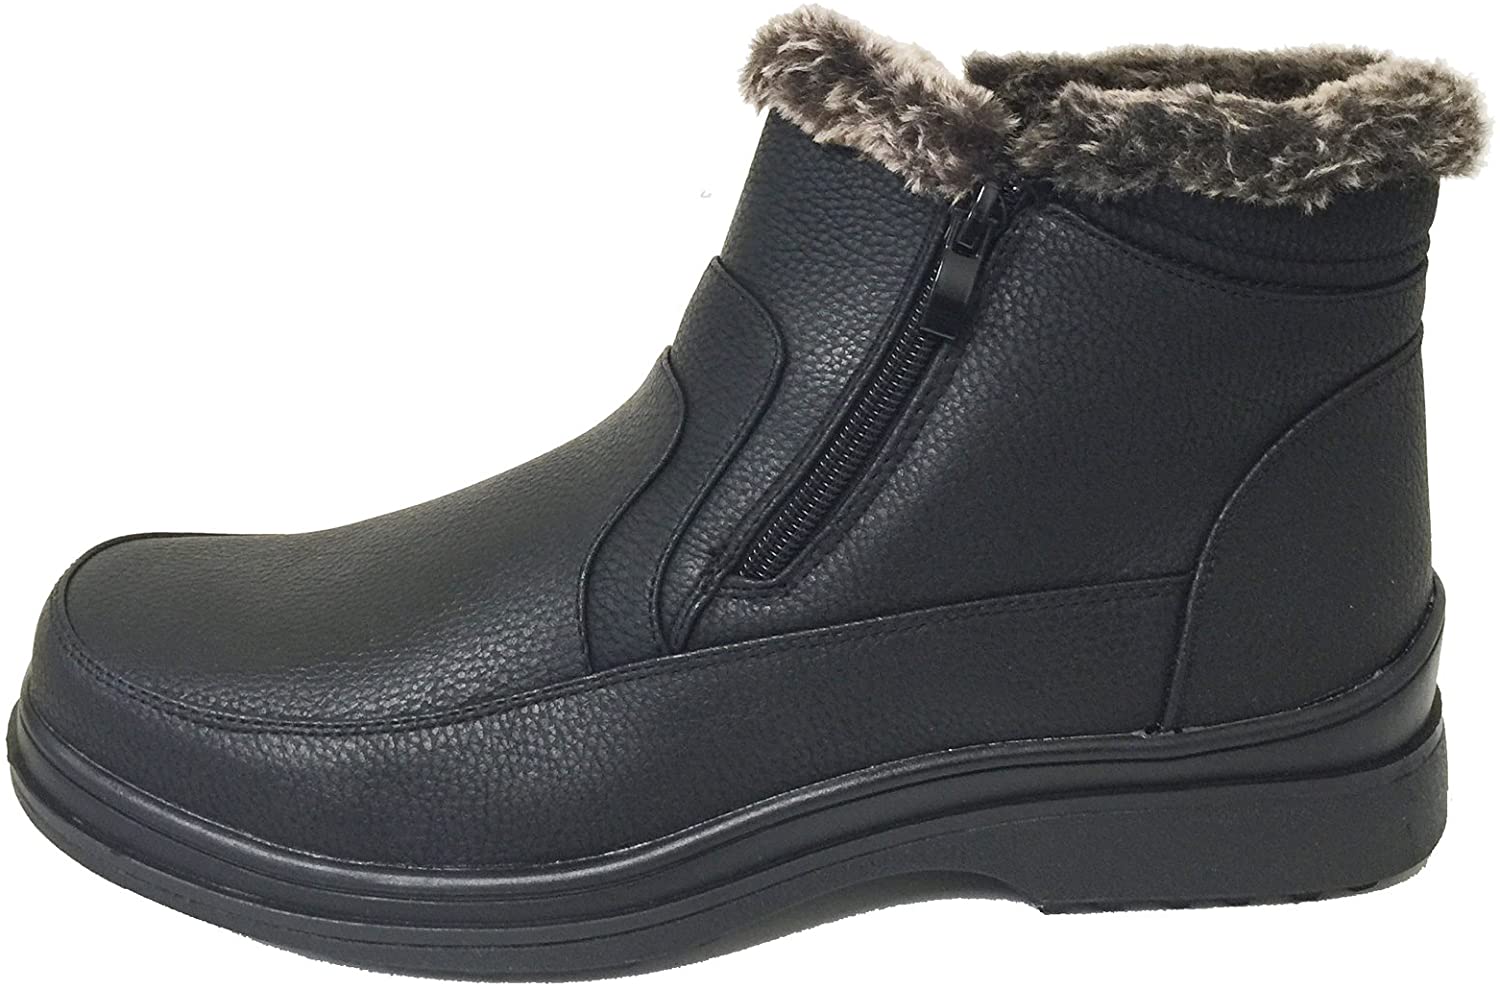 Men's Winter Boots Faux Fur Lined Dual Side Zipper Ankle Snow Comfort Shoes - image 3 of 7